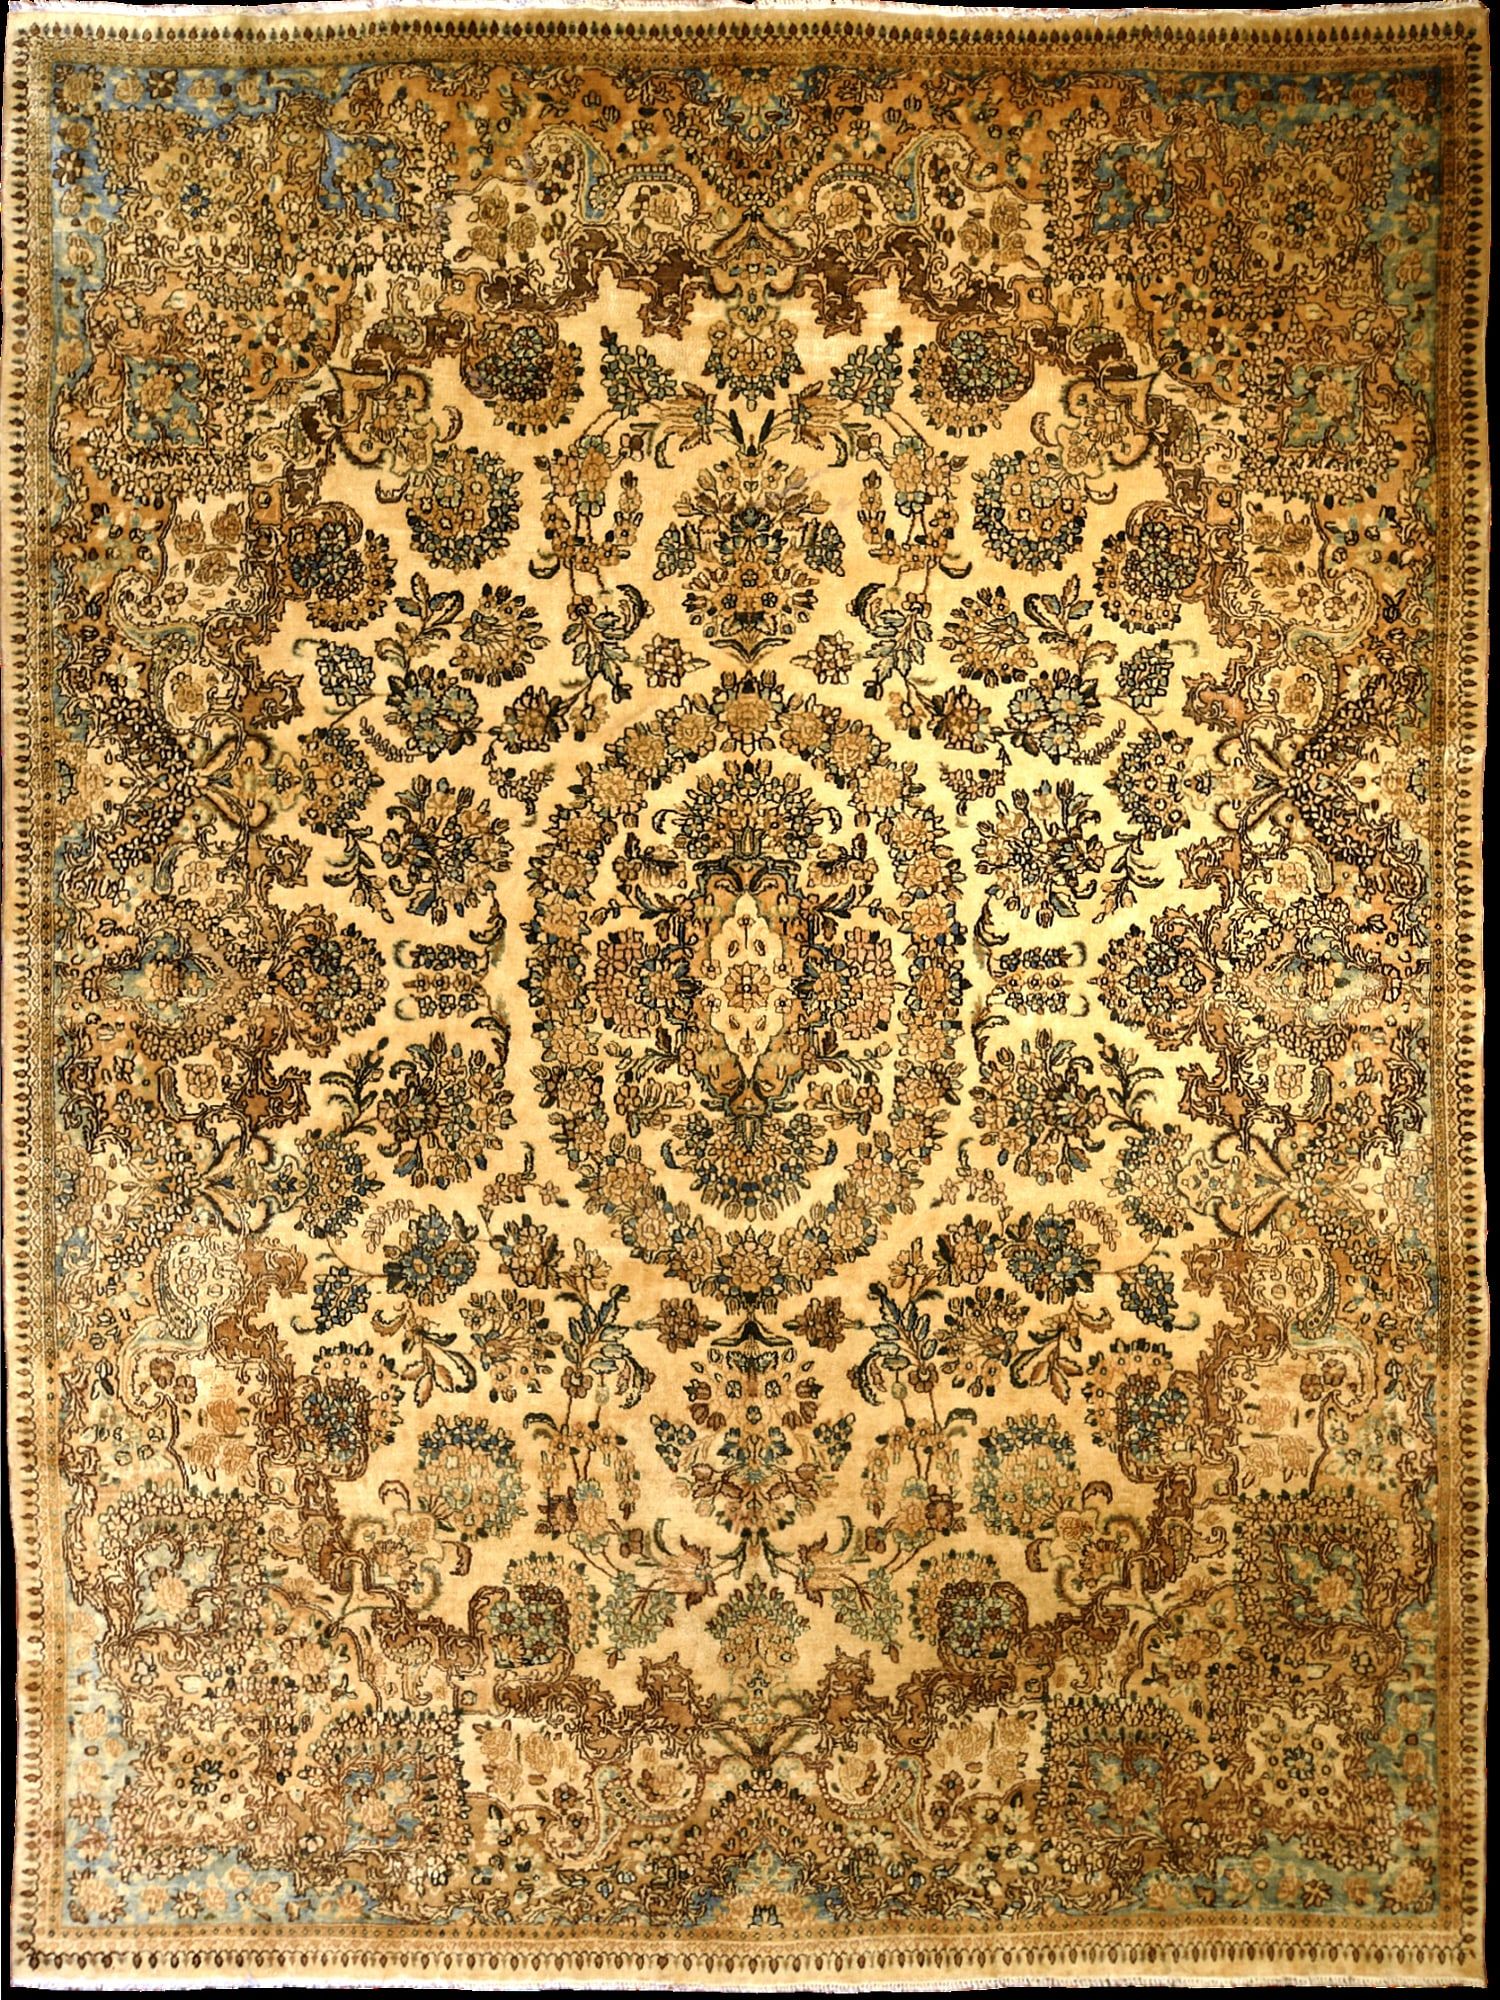 A KERMAN CARPETA Kerman carpetdimensions 2fb334a